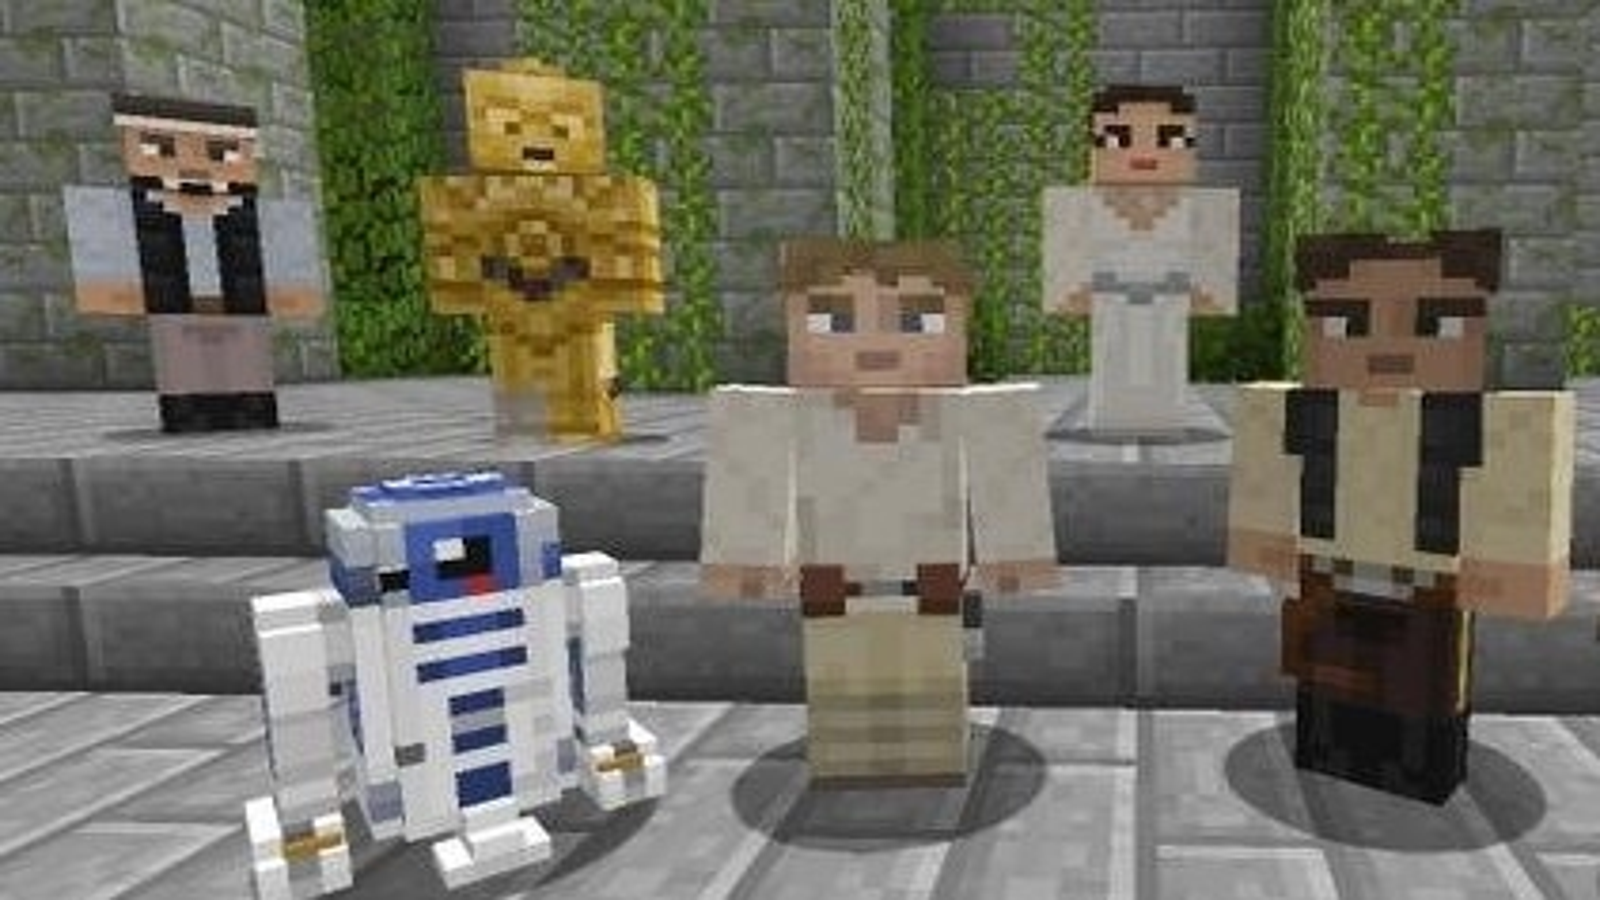 Star Wars Classic Skin Pack in Minecraft